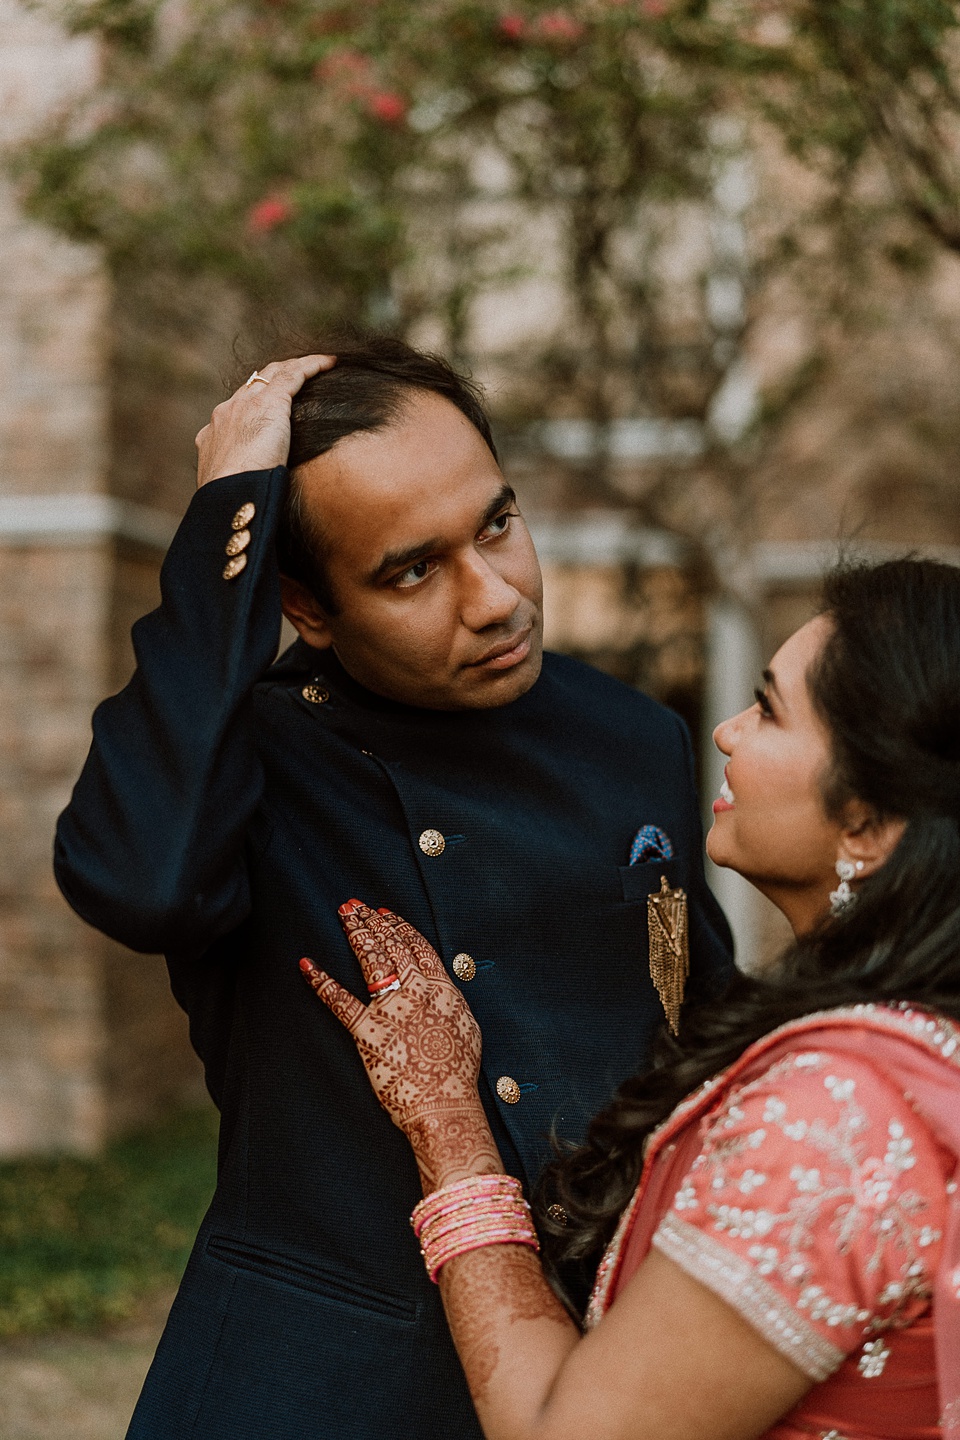 Nivi + Kousik | South Indian Cinematic Wedding Highlight Livermore Temple  on Vimeo